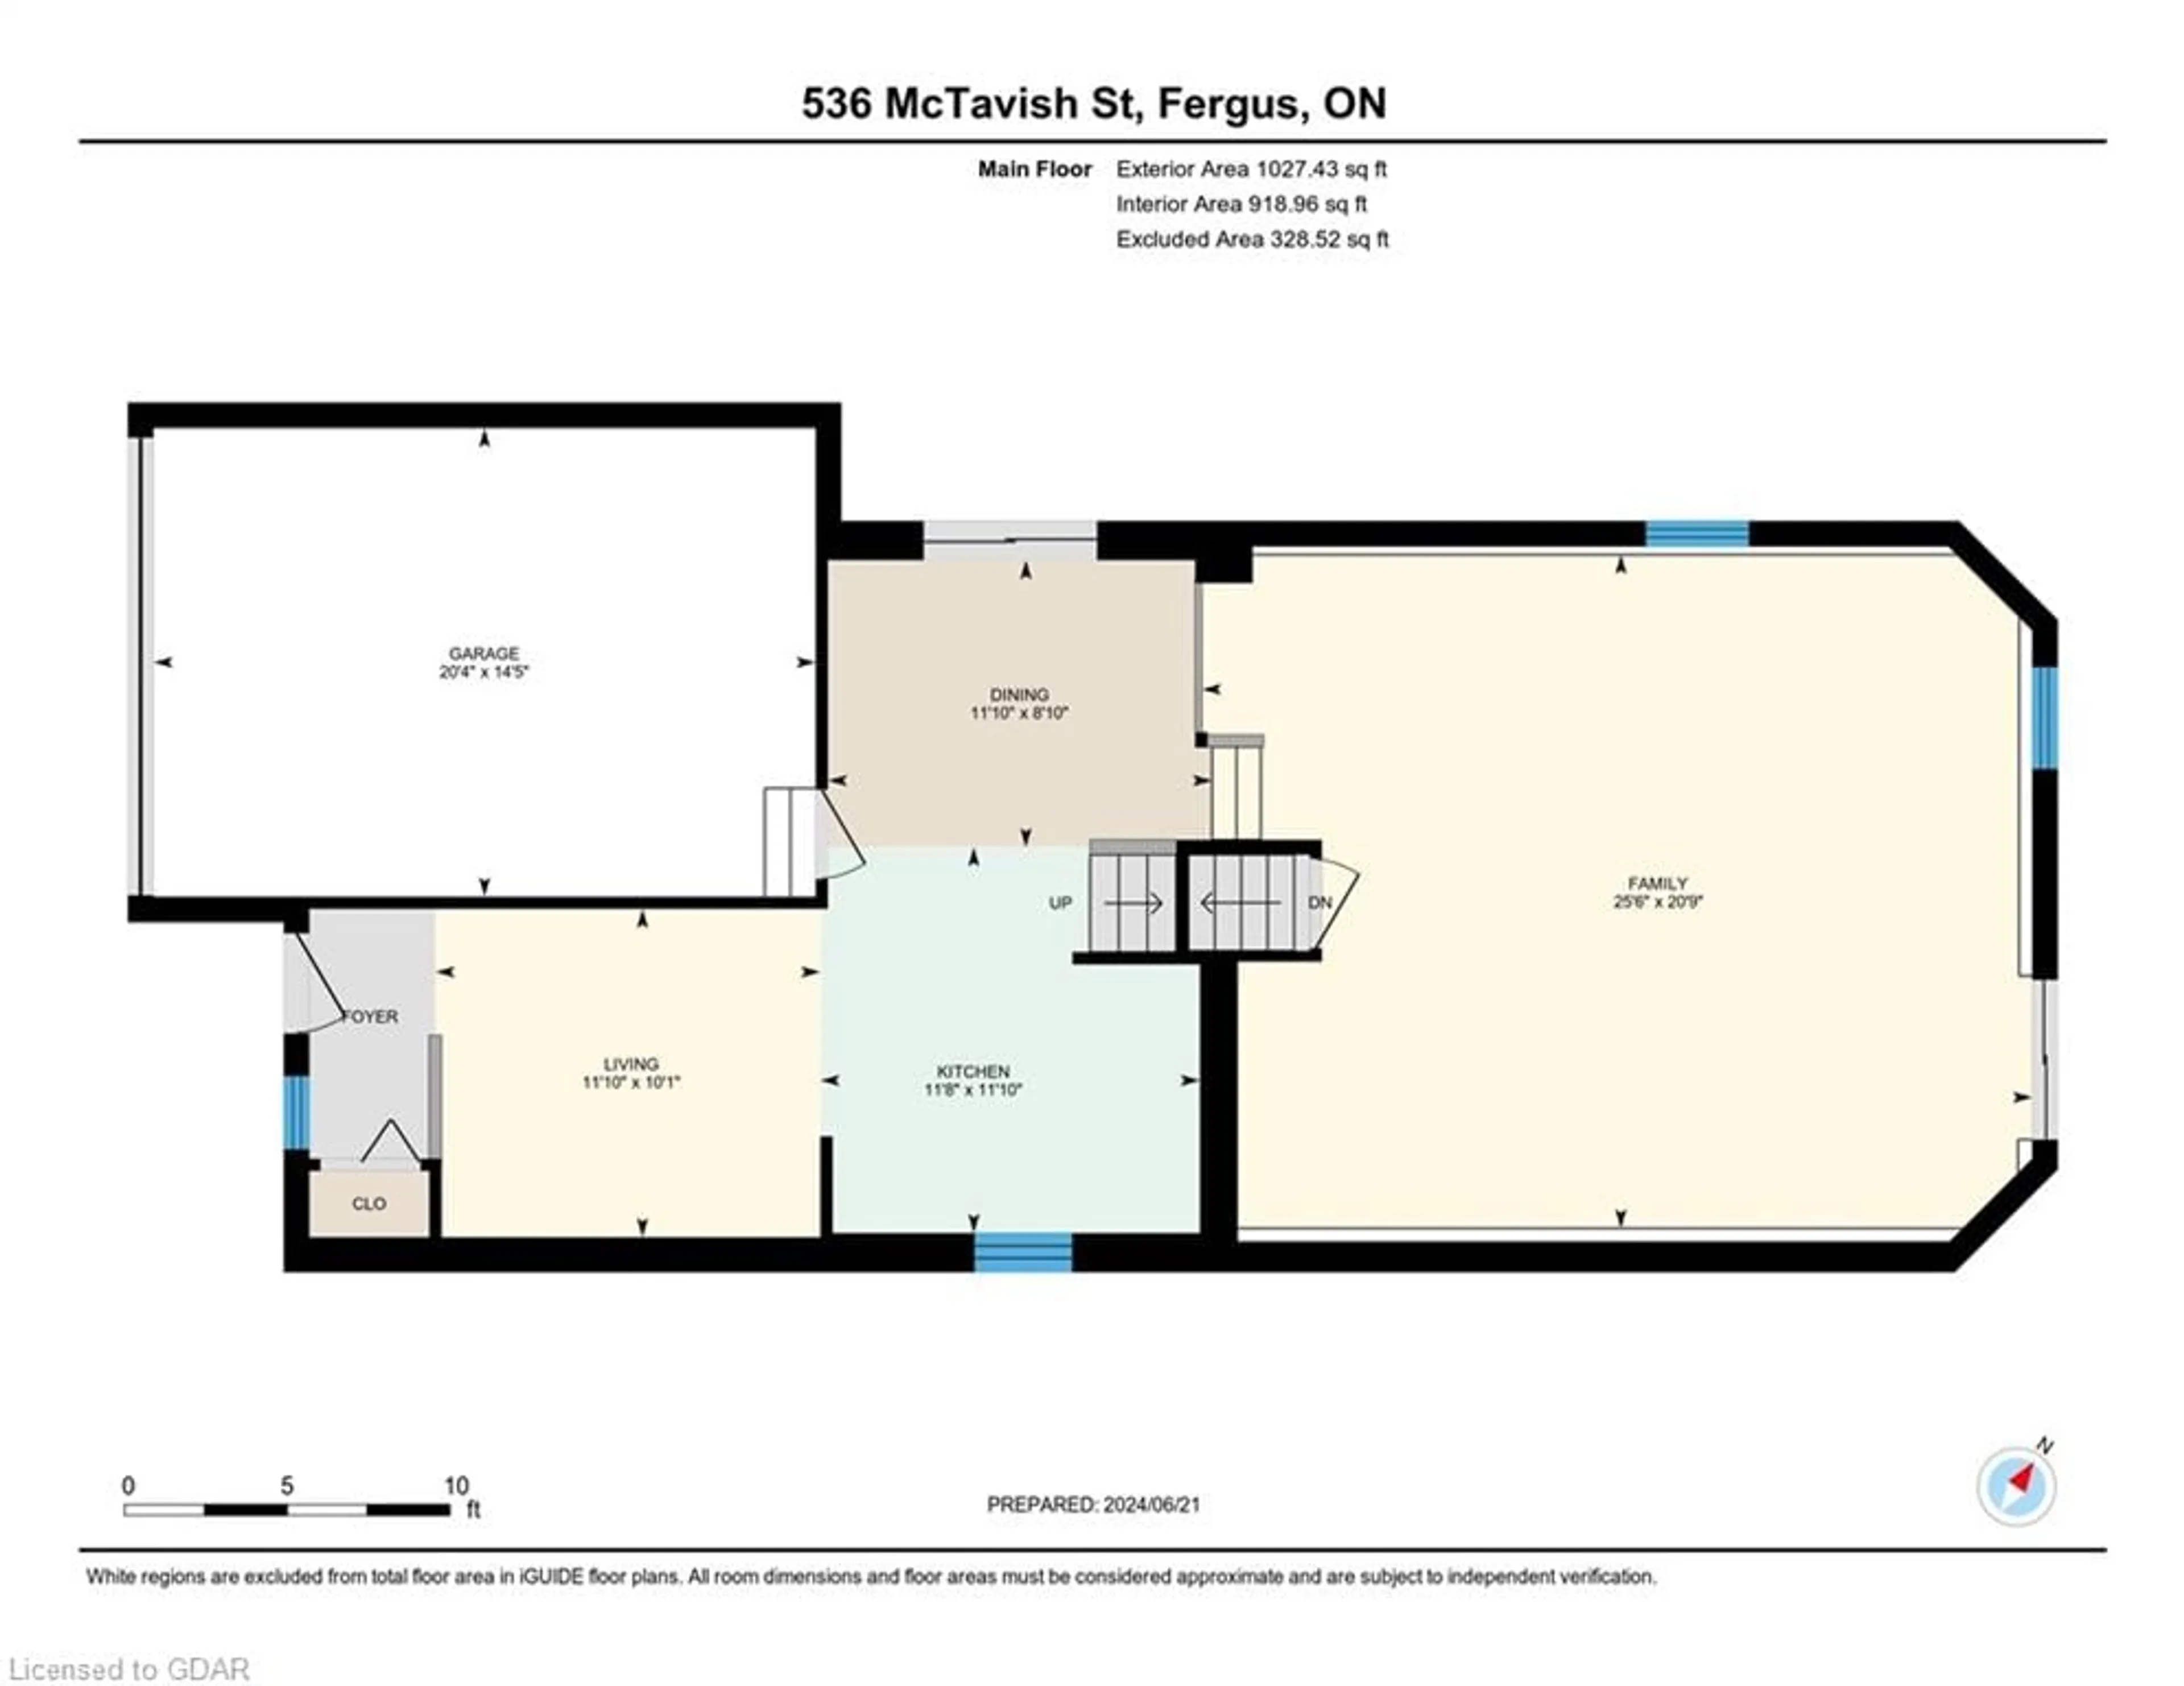 Floor plan for 536 Mctavish St, Fergus Ontario N1M 3P9